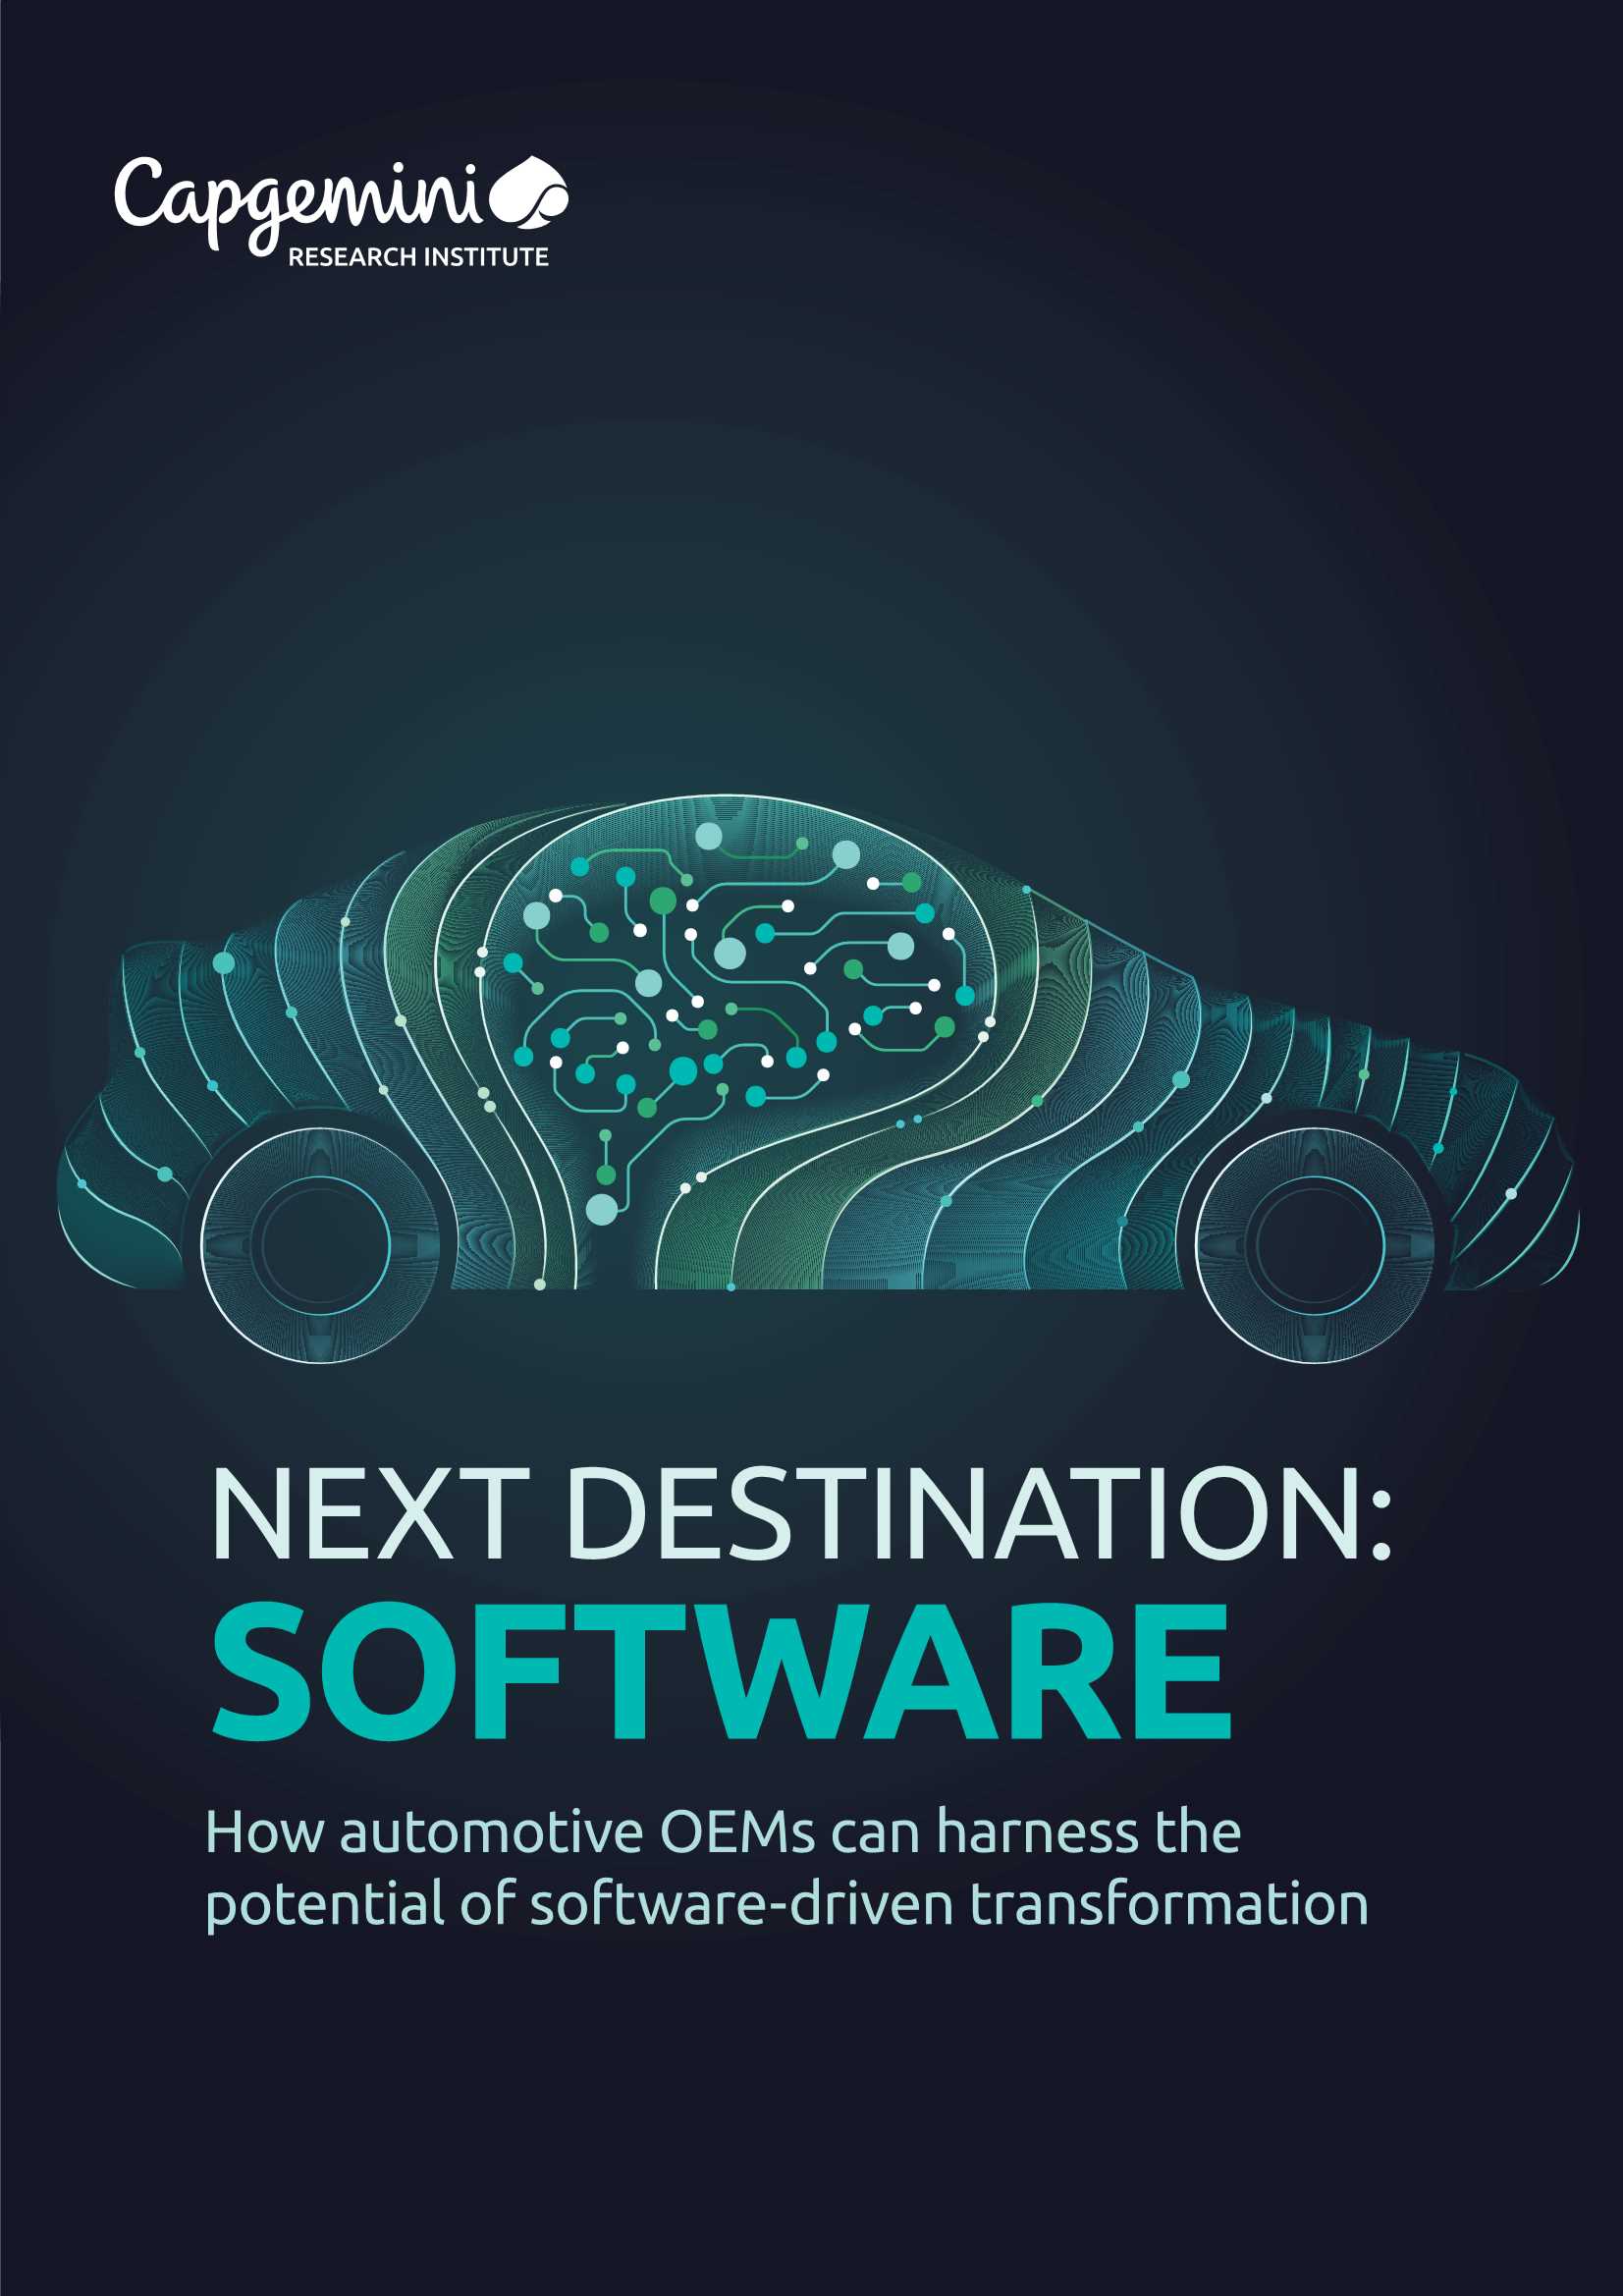 Capgemini-汽车原始设备制造商如何利用软件驱动转型的潜力（英）-2021.09-52页